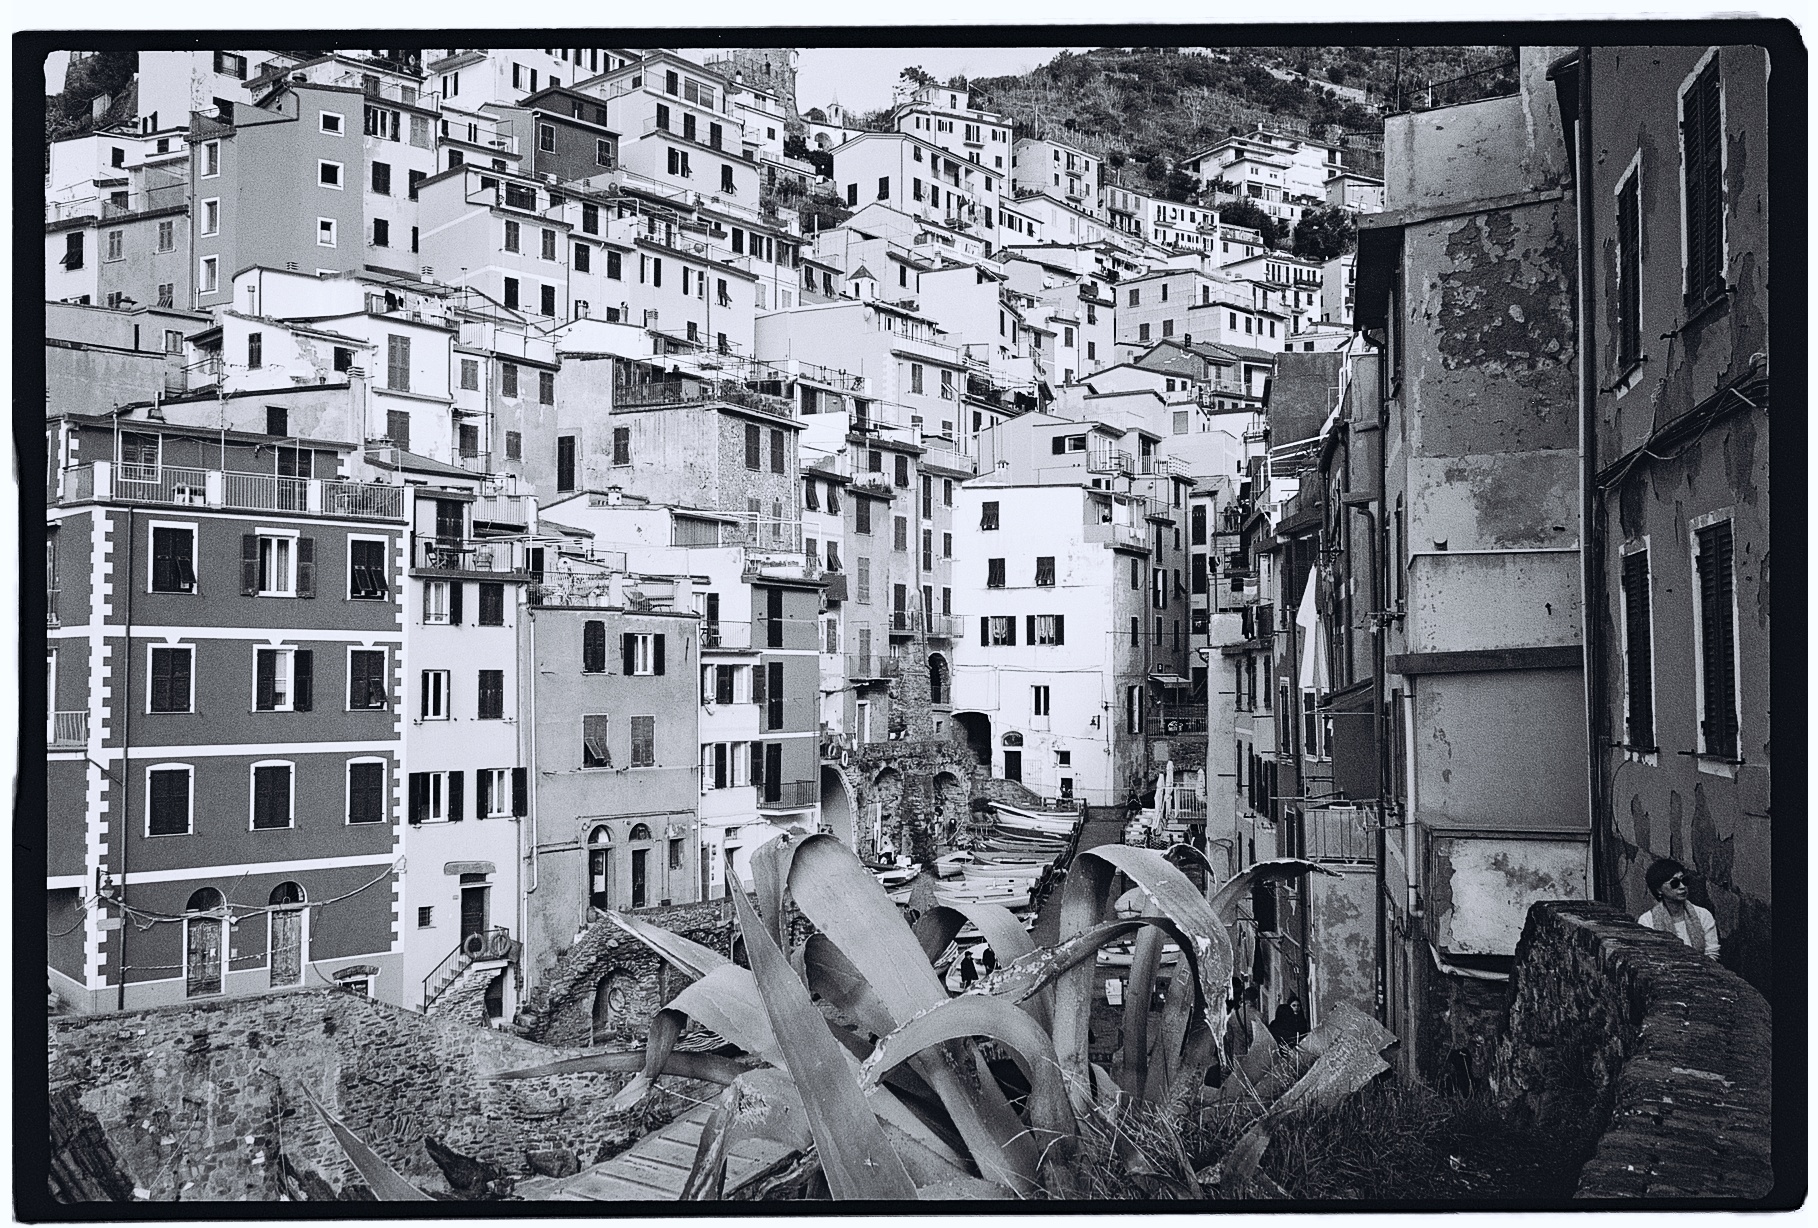 Le joli village de Riomaggiore en noir et blanc